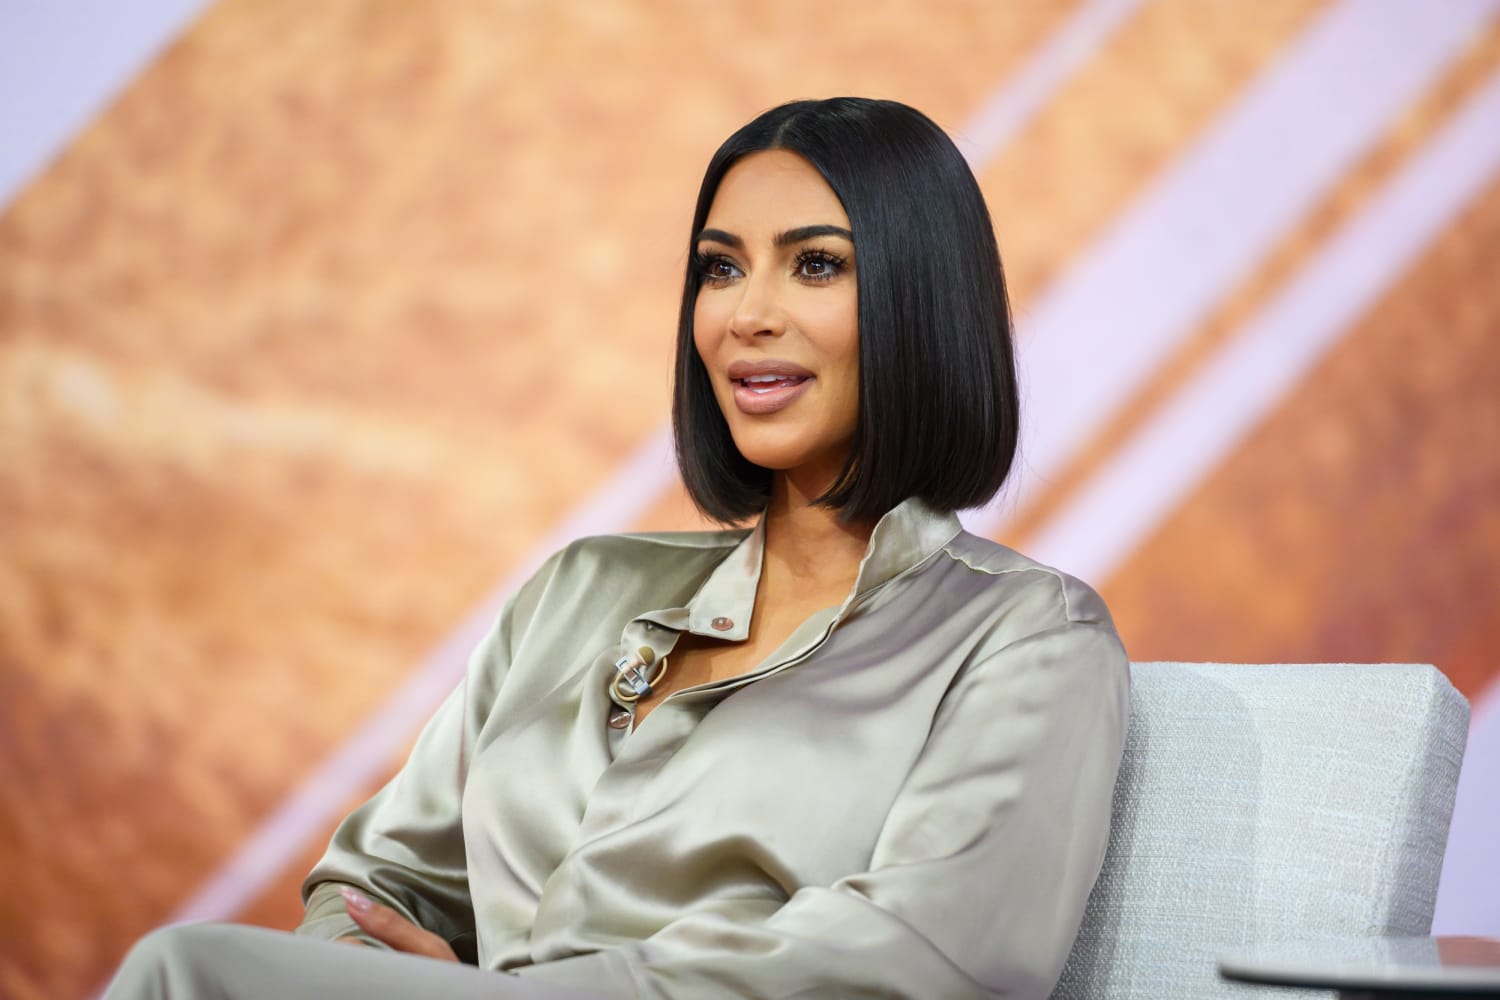 Kim Kardashian says she has passed California’s ‘baby bar’ exam